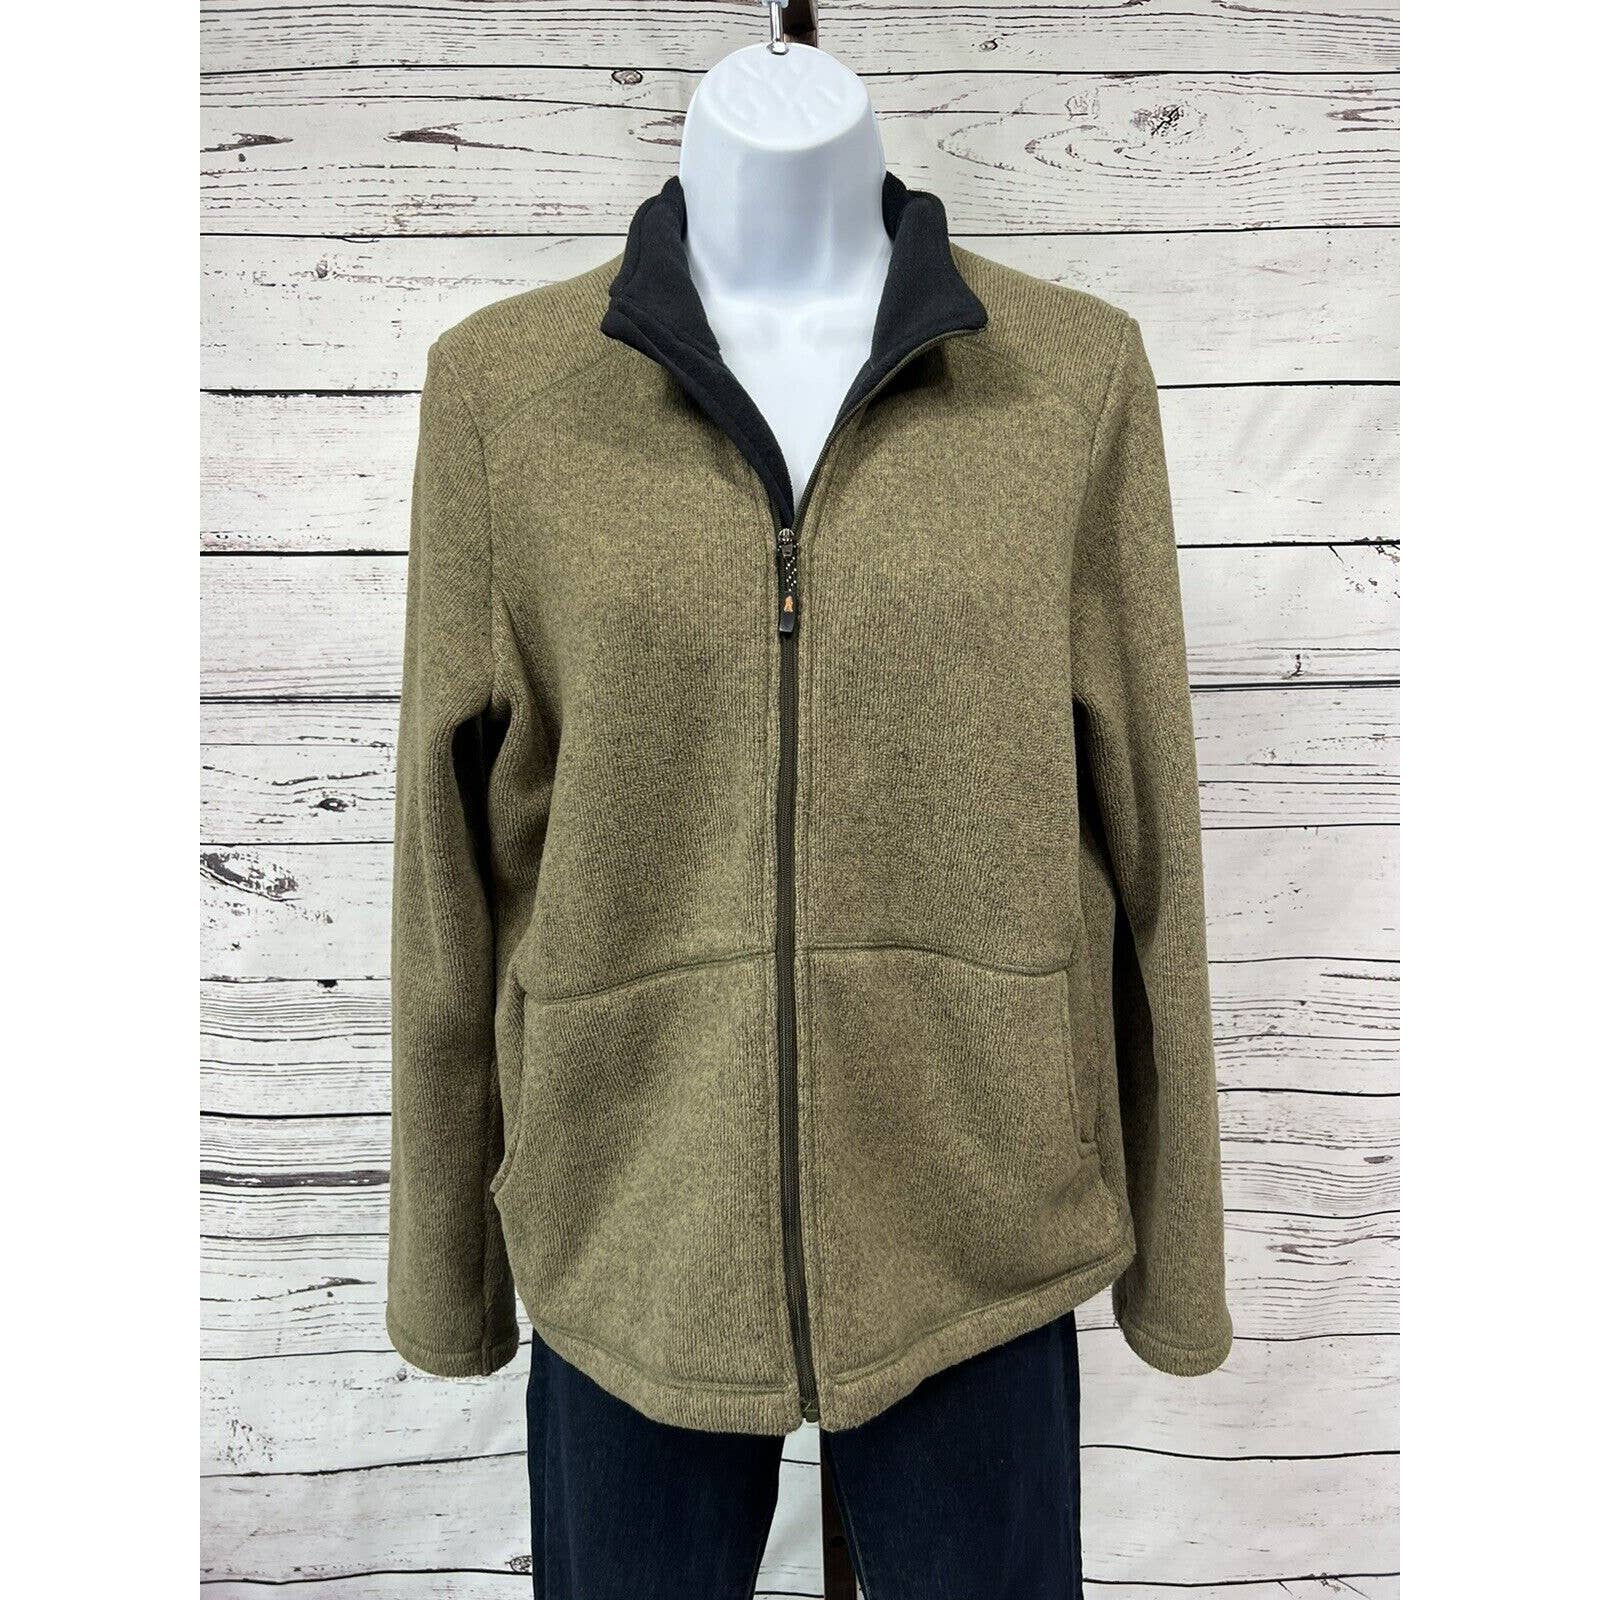 Royal Robbins Full Zip Fleece Sweater Jacket Womens Medium Pockets Taupe